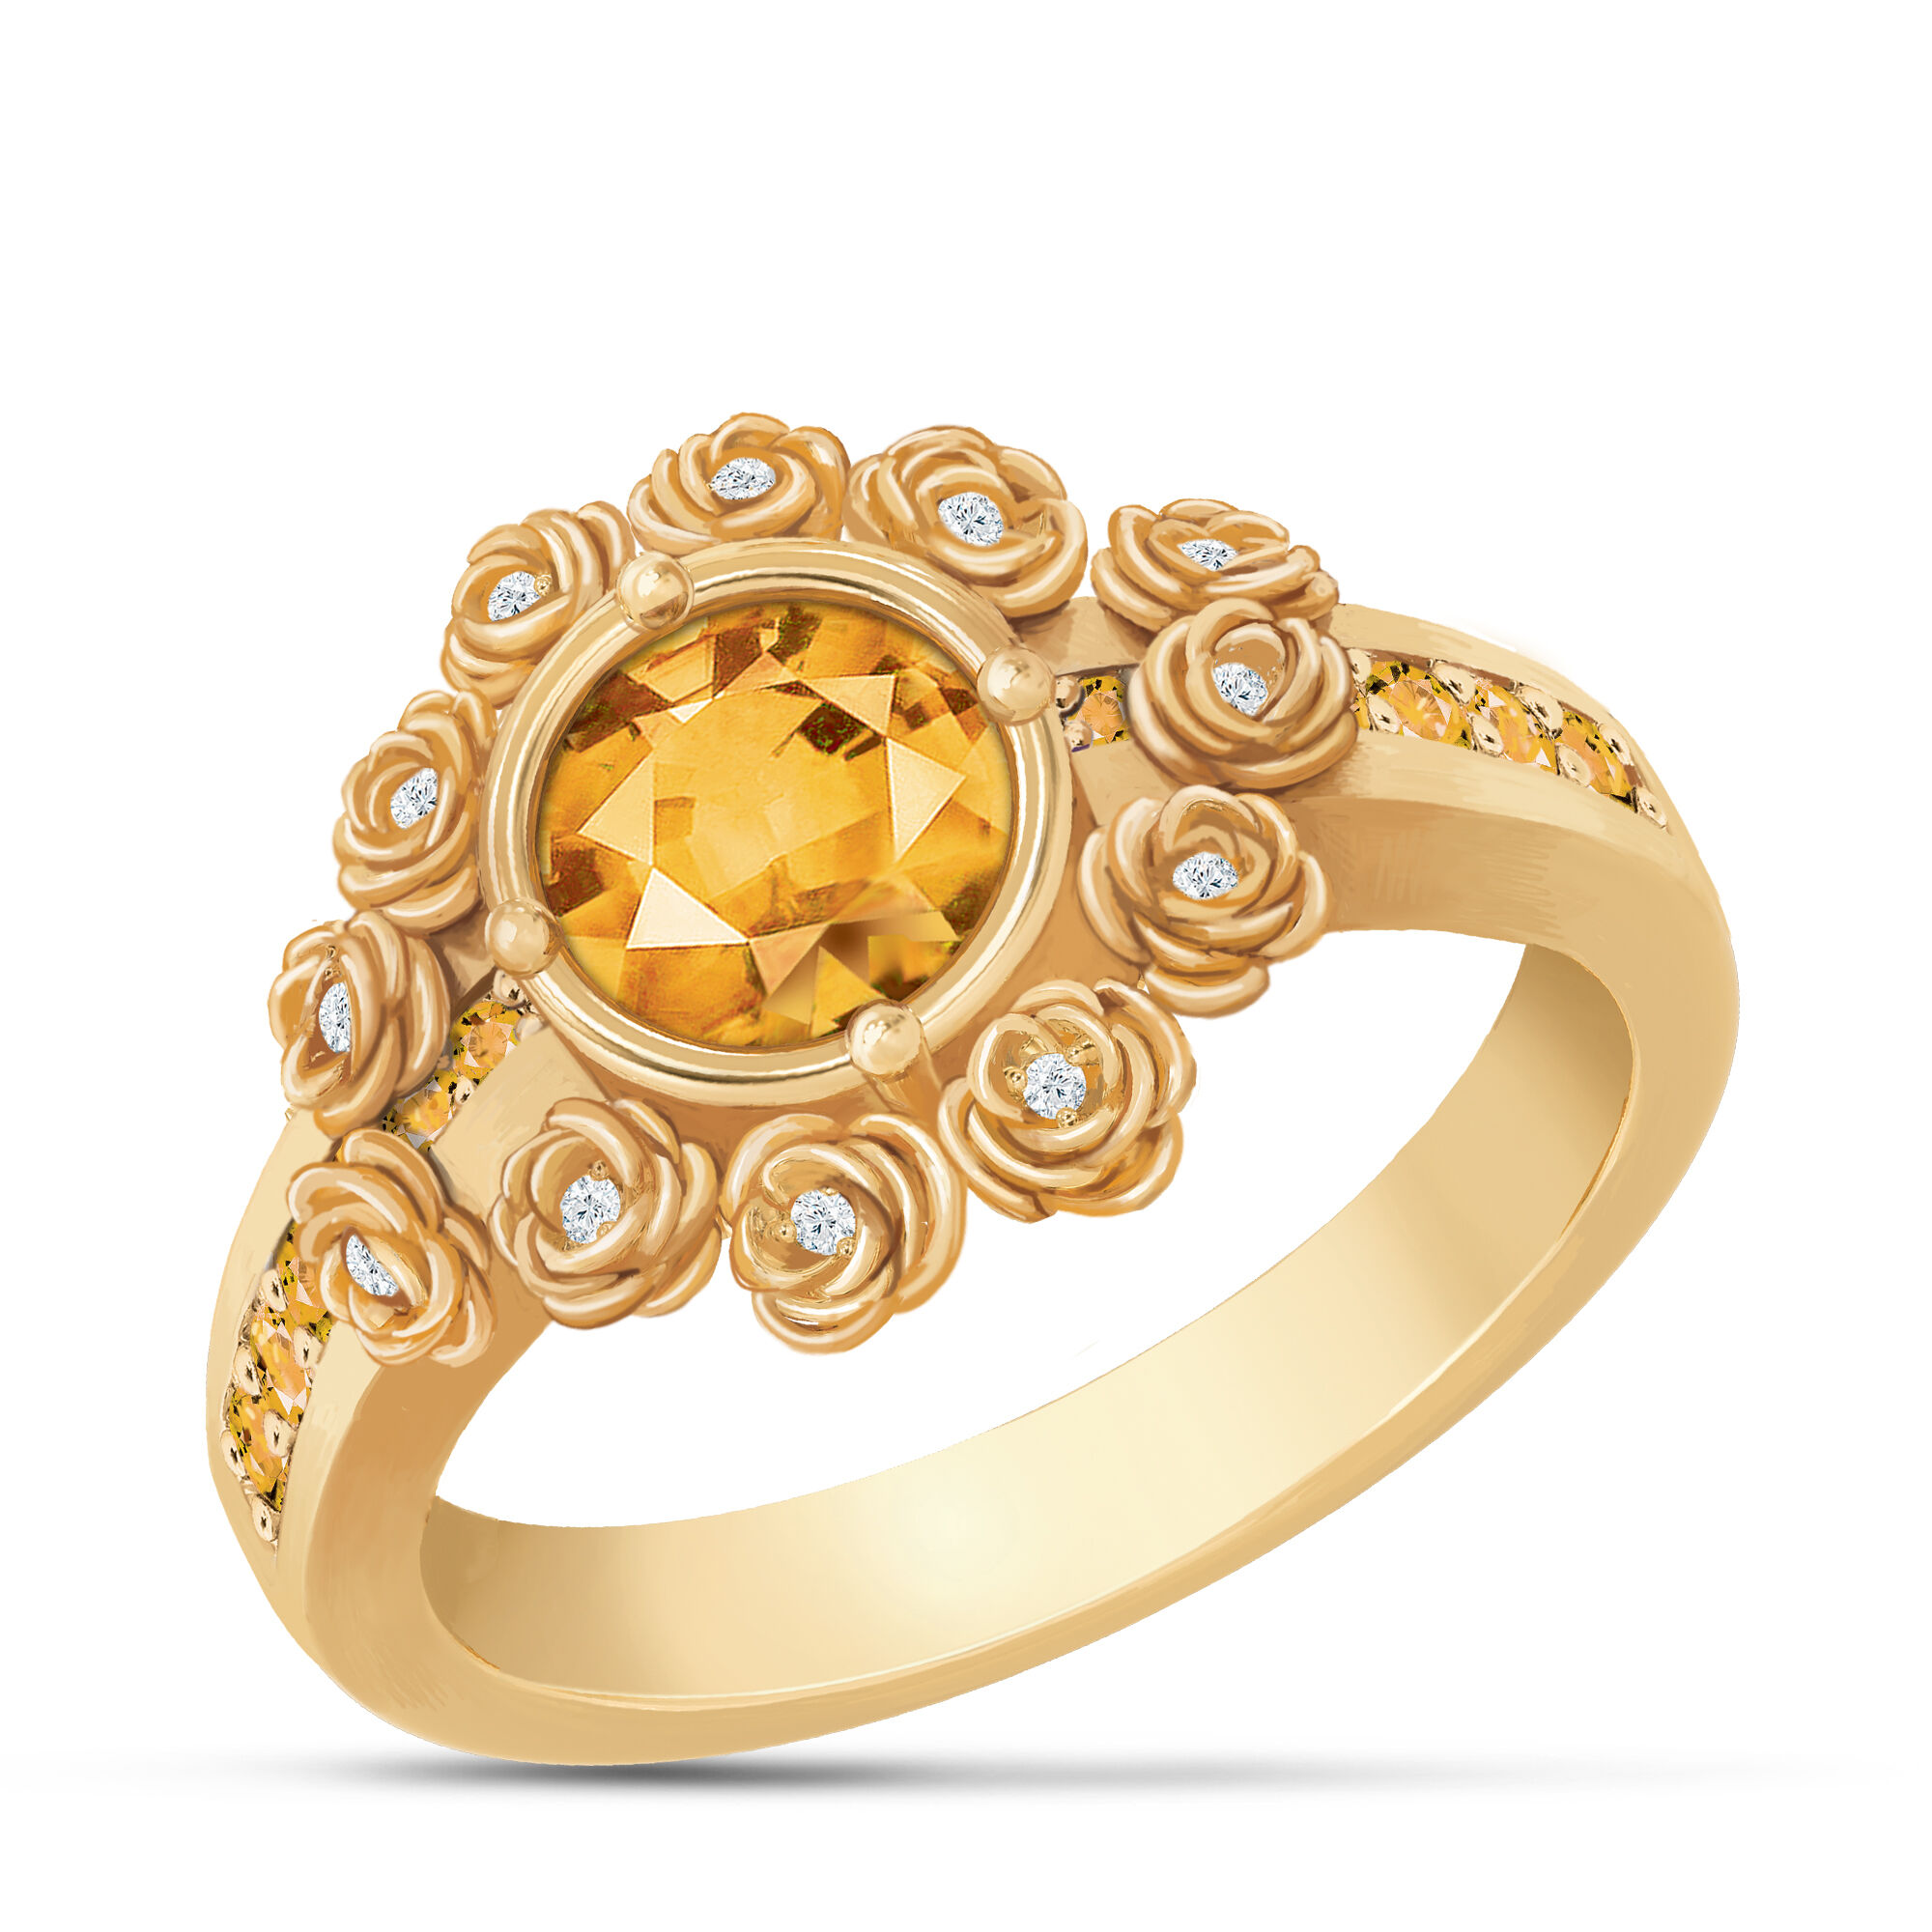 A Dozen Roses Birthstone Diamond Ring 6874 0018 k november